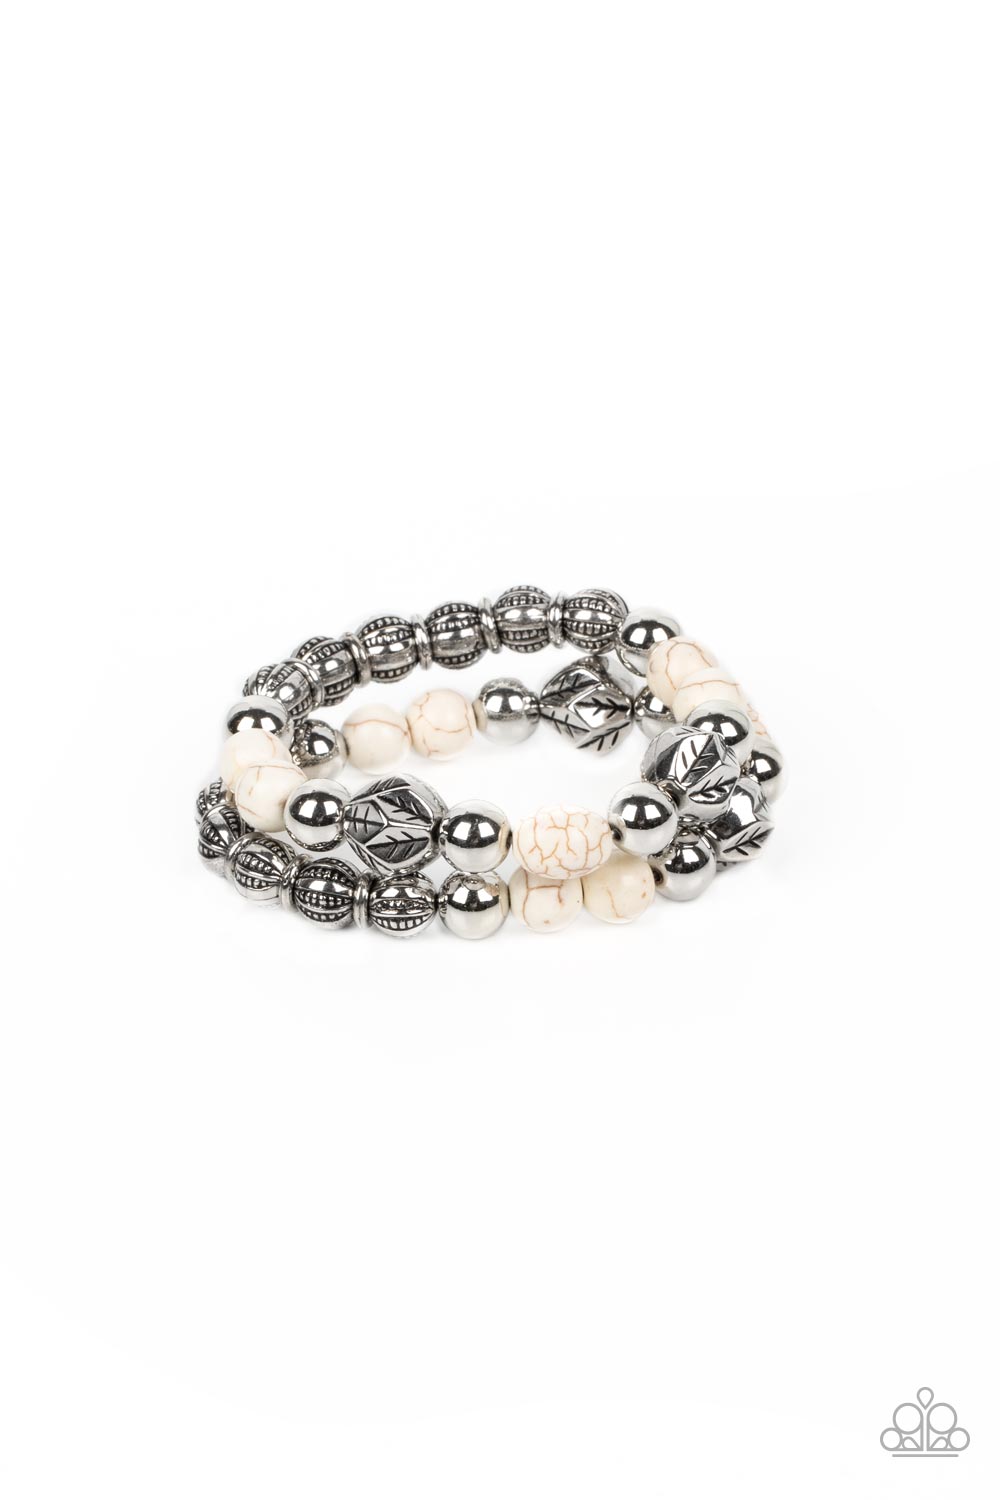 Sagebrush Saga White Stone Bracelet - Paparazzi Accessories- lightbox - CarasShop.com - $5 Jewelry by Cara Jewels